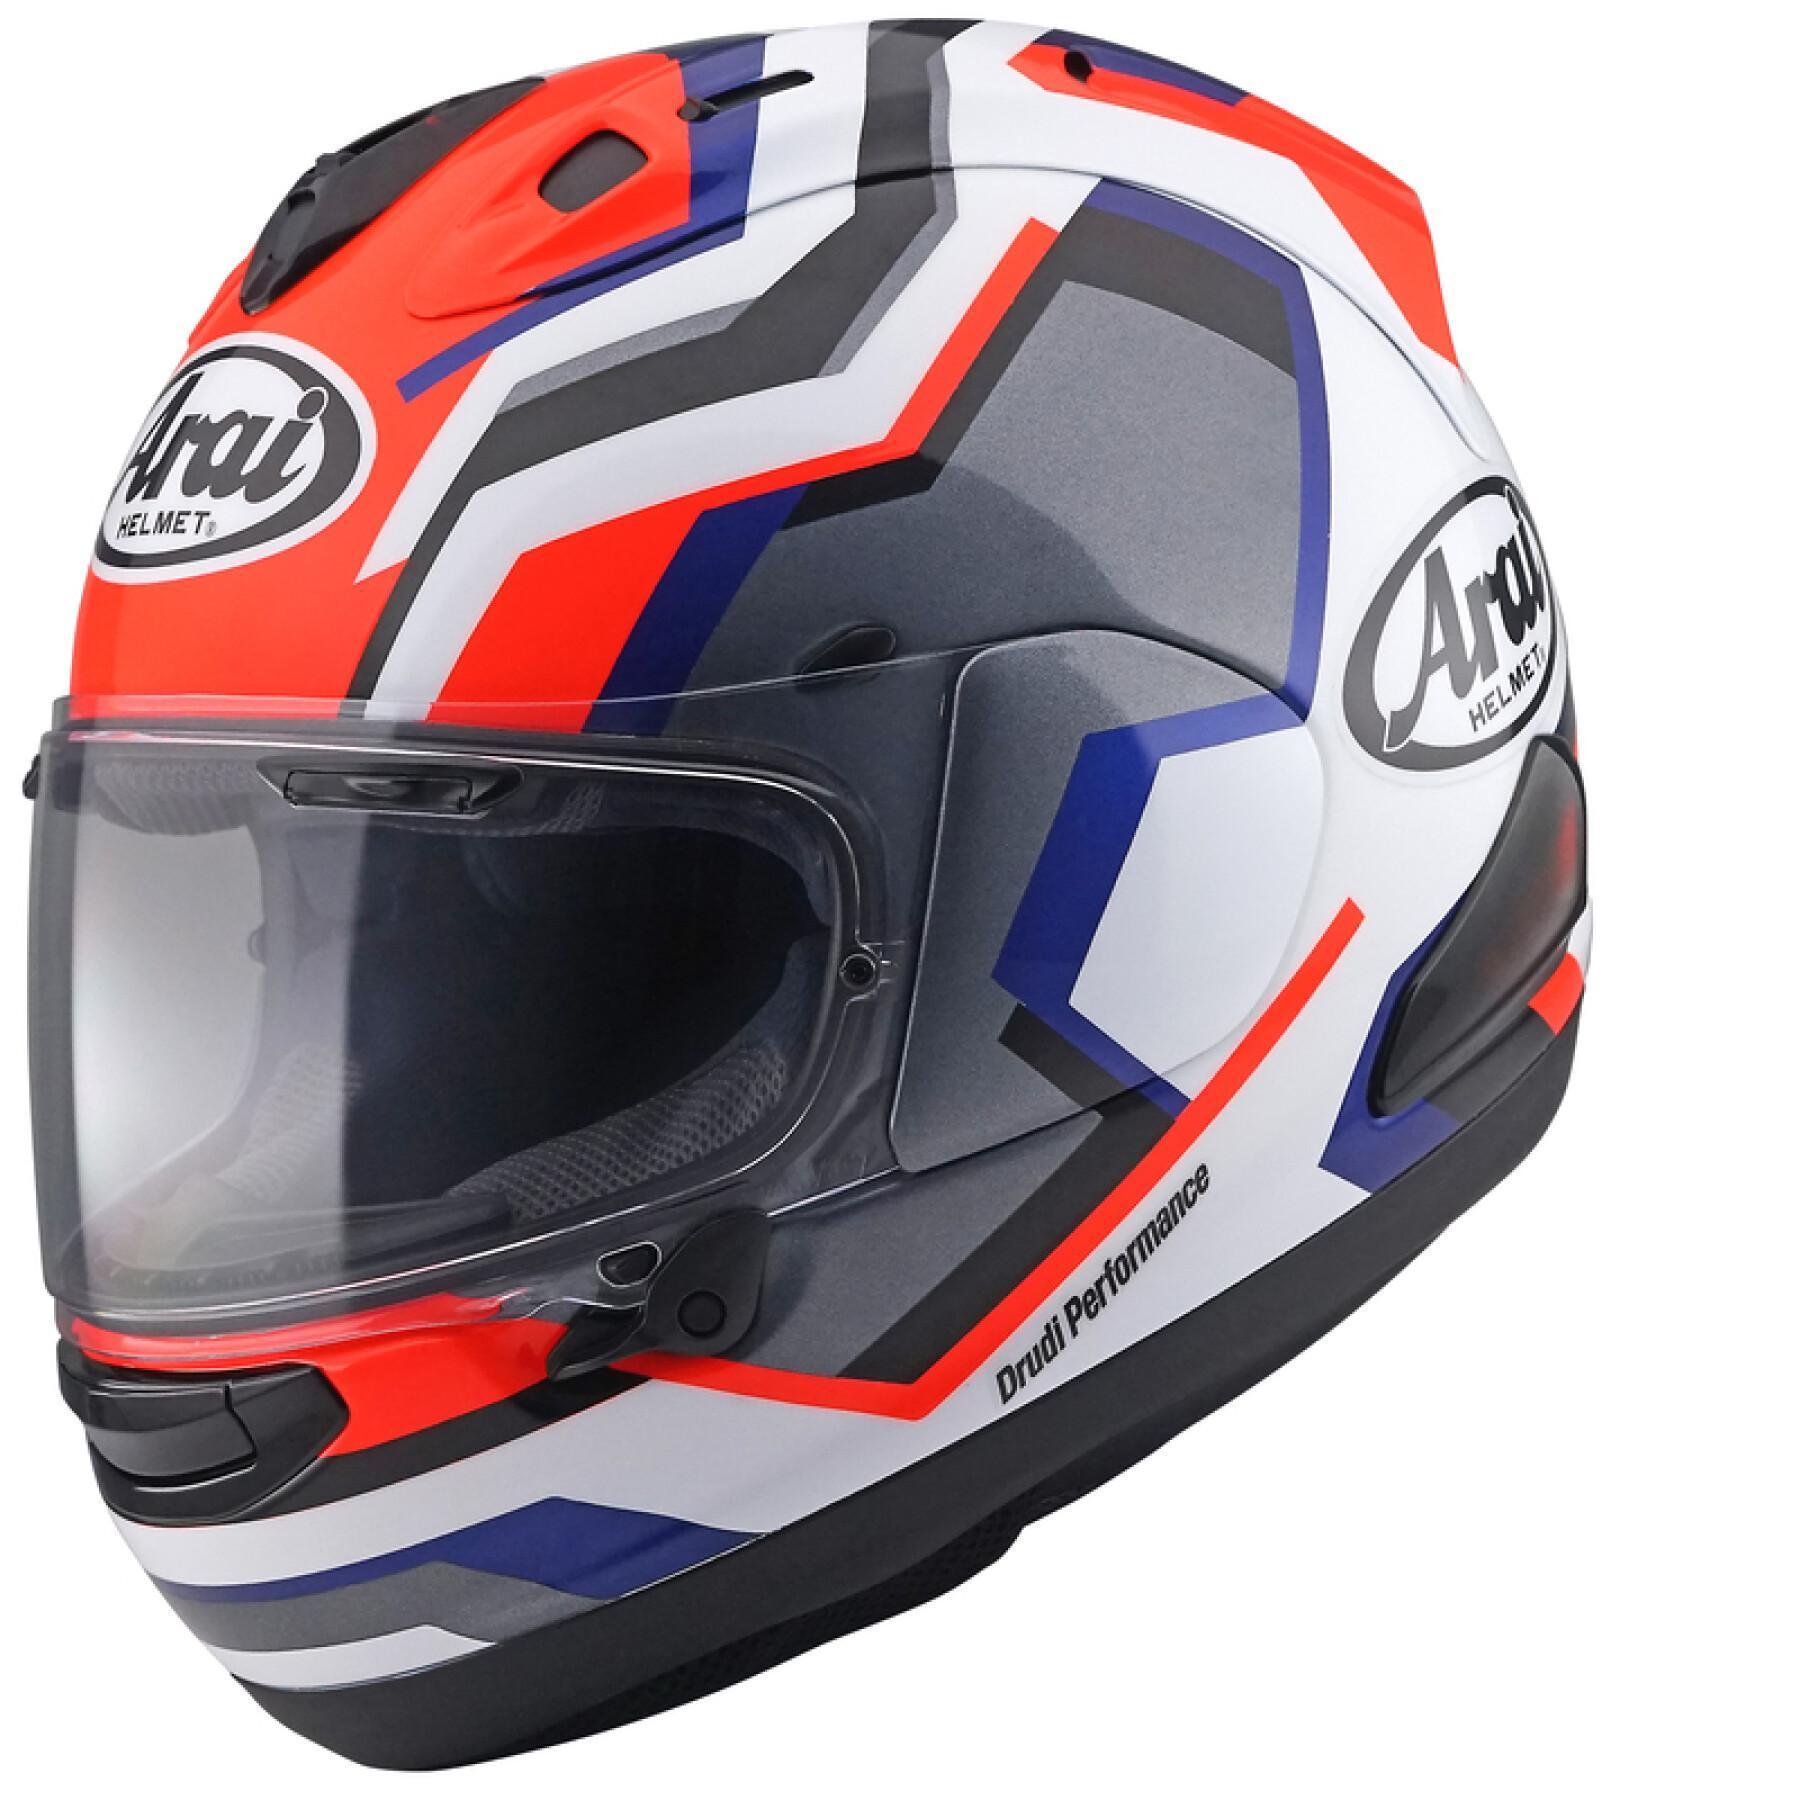 Full face motorcycle helmet Arai RX-7V EVO RSW